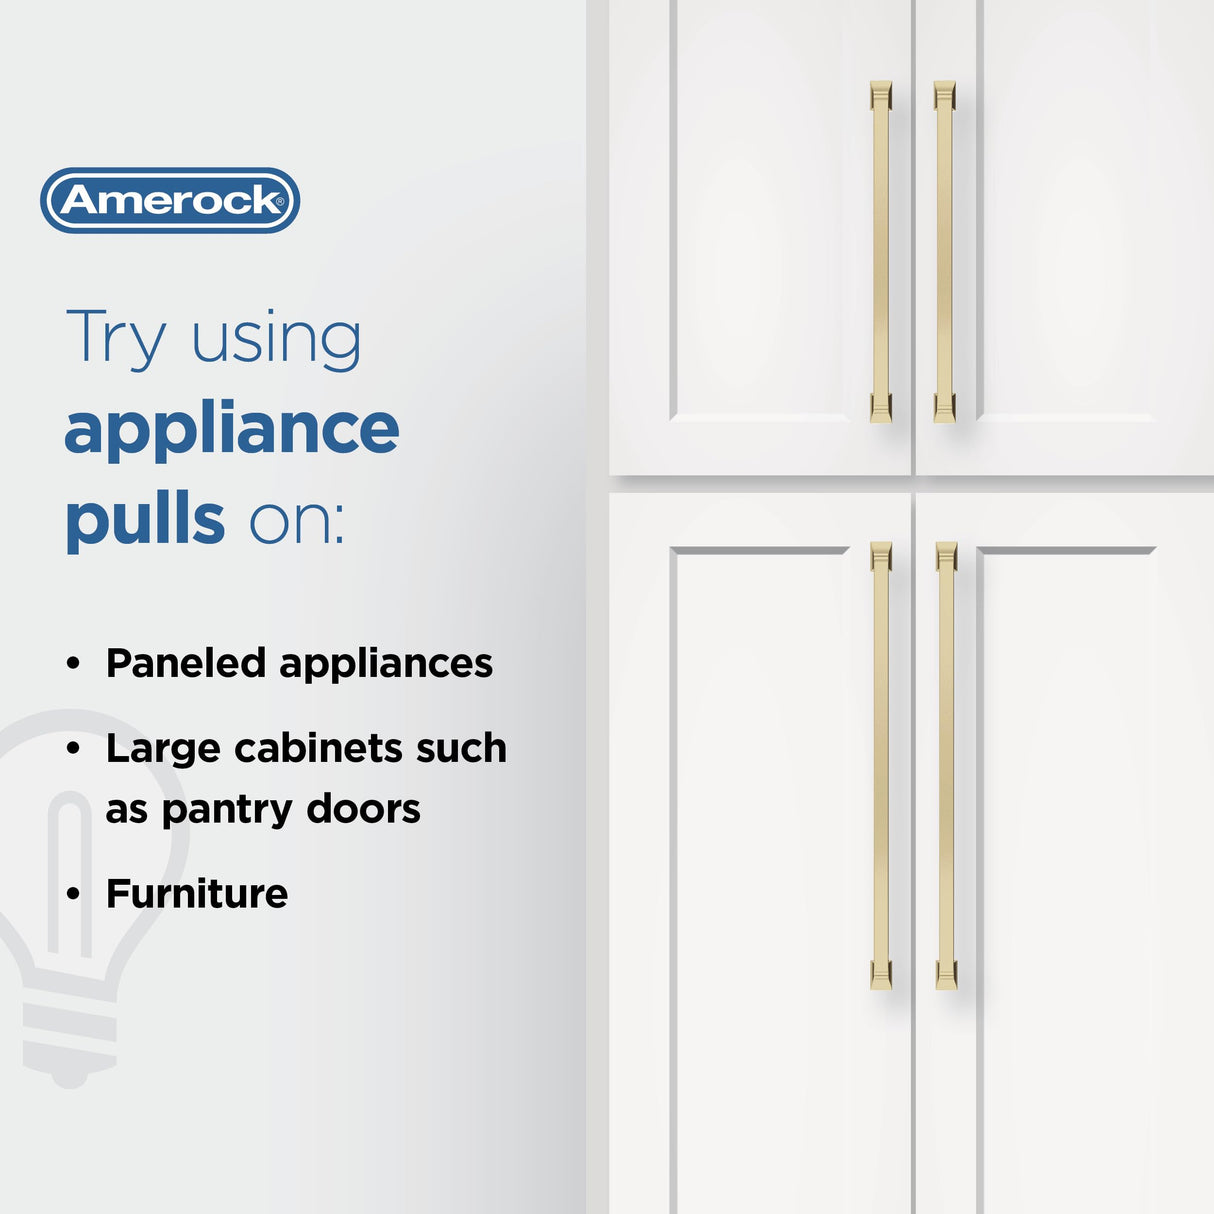 Amerock Appliance Pull Black Bronze 12 inch (305 mm) Center to Center Bar Pulls 1 Pack Drawer Pull Drawer Handle Cabinet Hardware